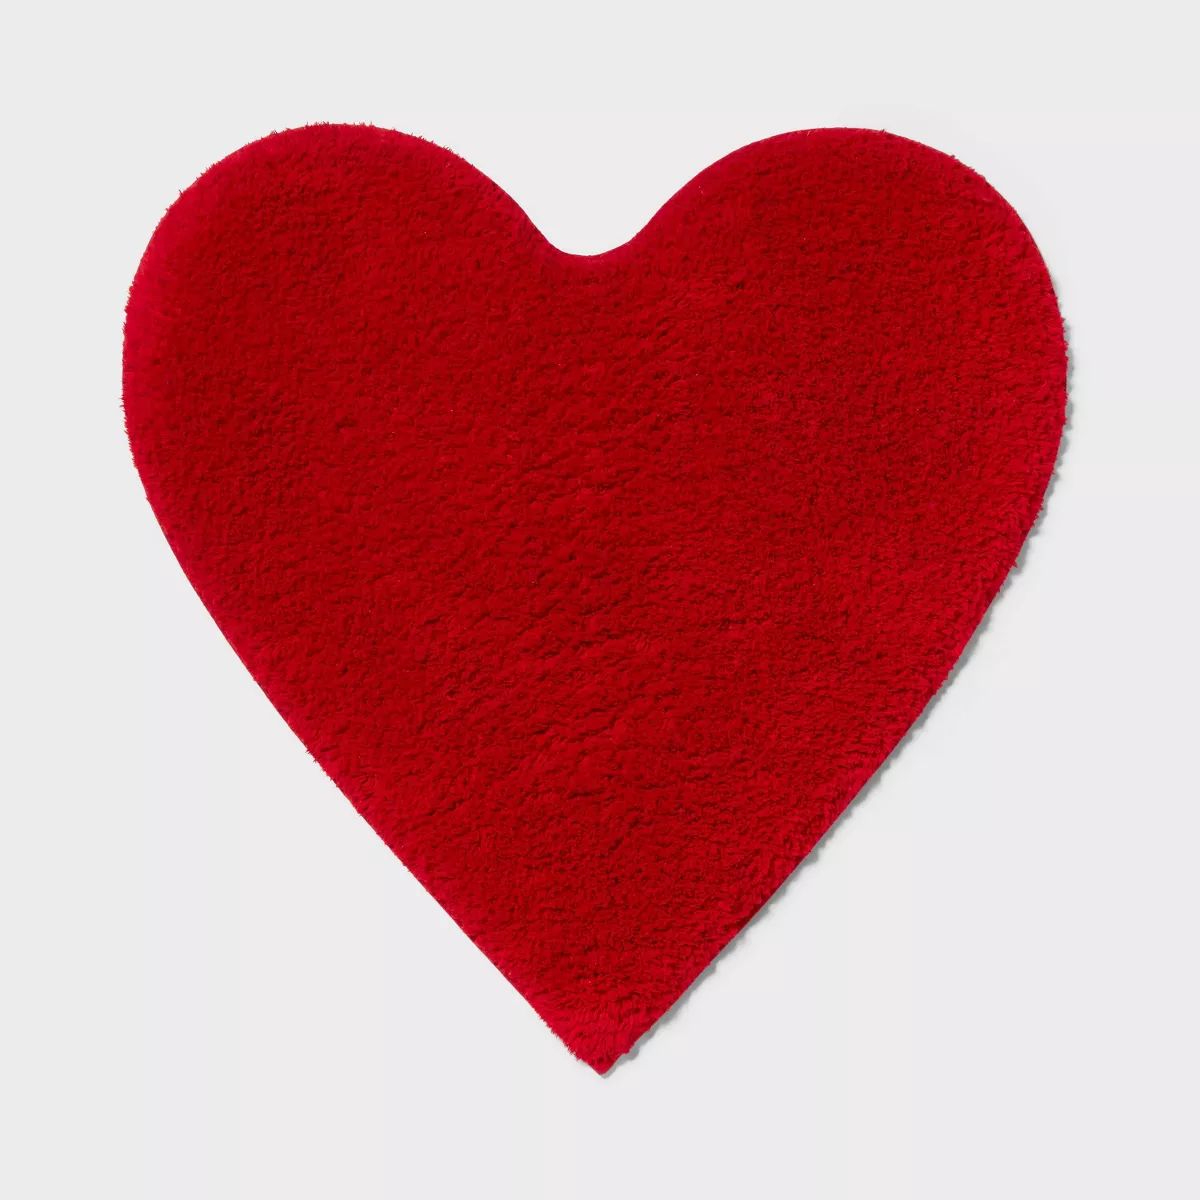 24"x24" Valentines Heart Shaped Bath Rug Red - Threshold™ | Target